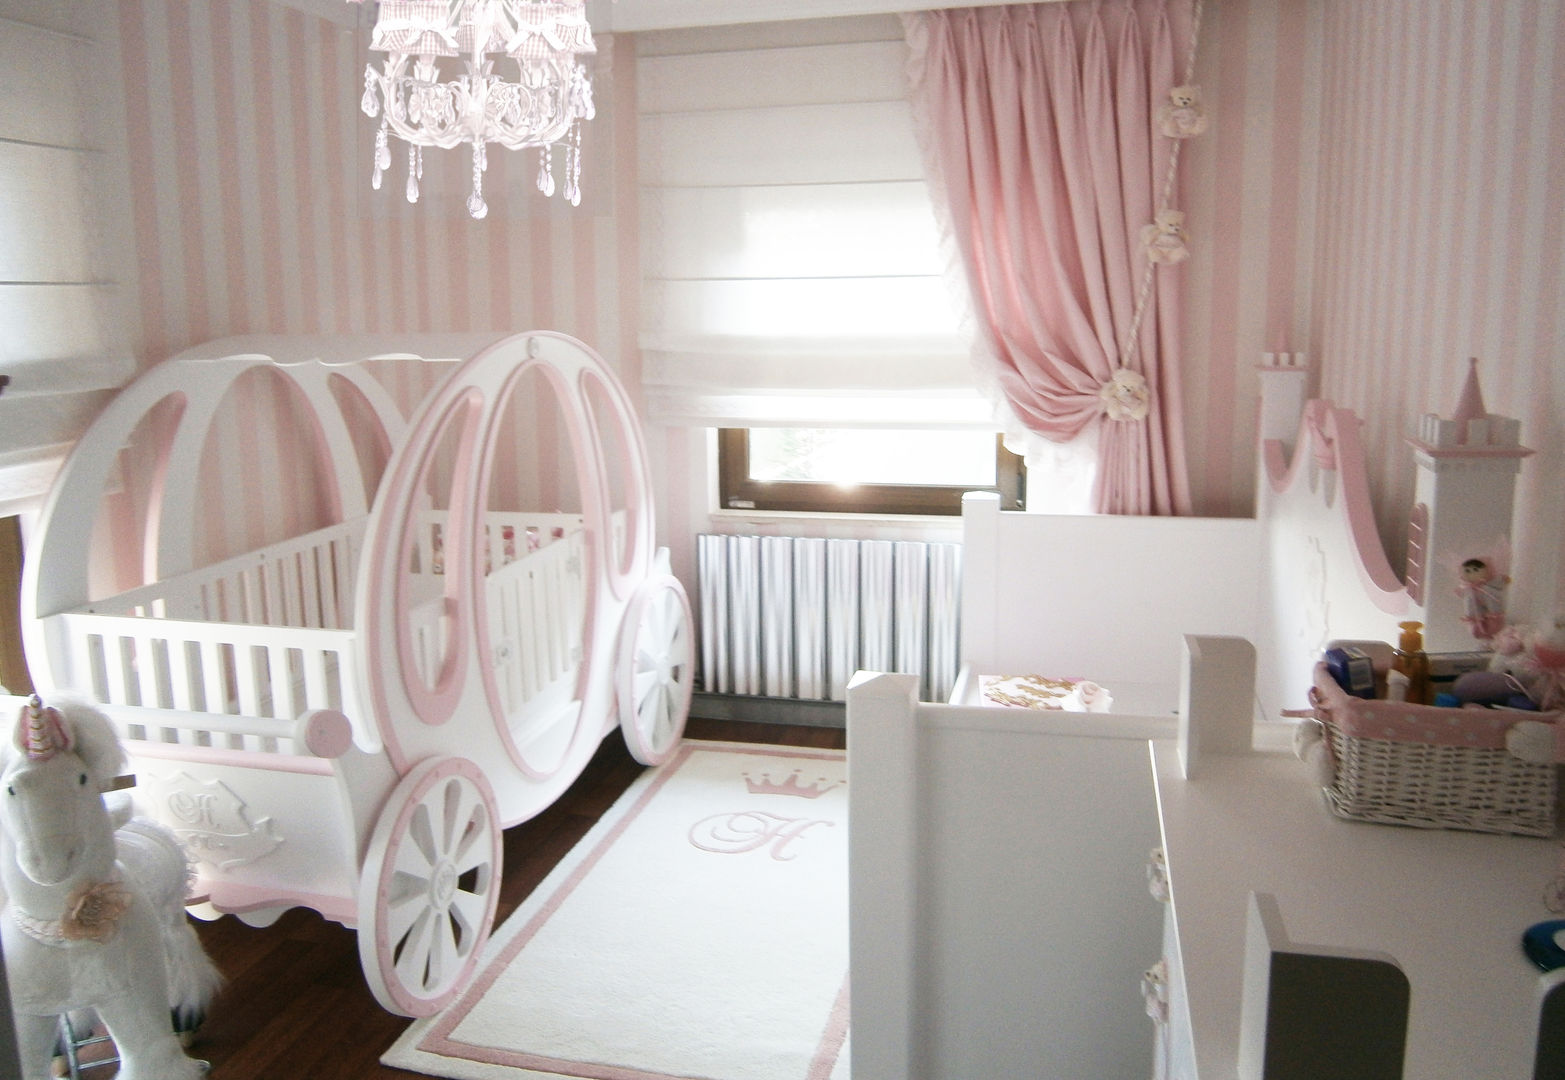 Lacote prenses çocuk ve bebek odası tasarımları, Lacote Design Lacote Design ห้องนอนเด็ก เตียงเด็กและเปลเด็ก